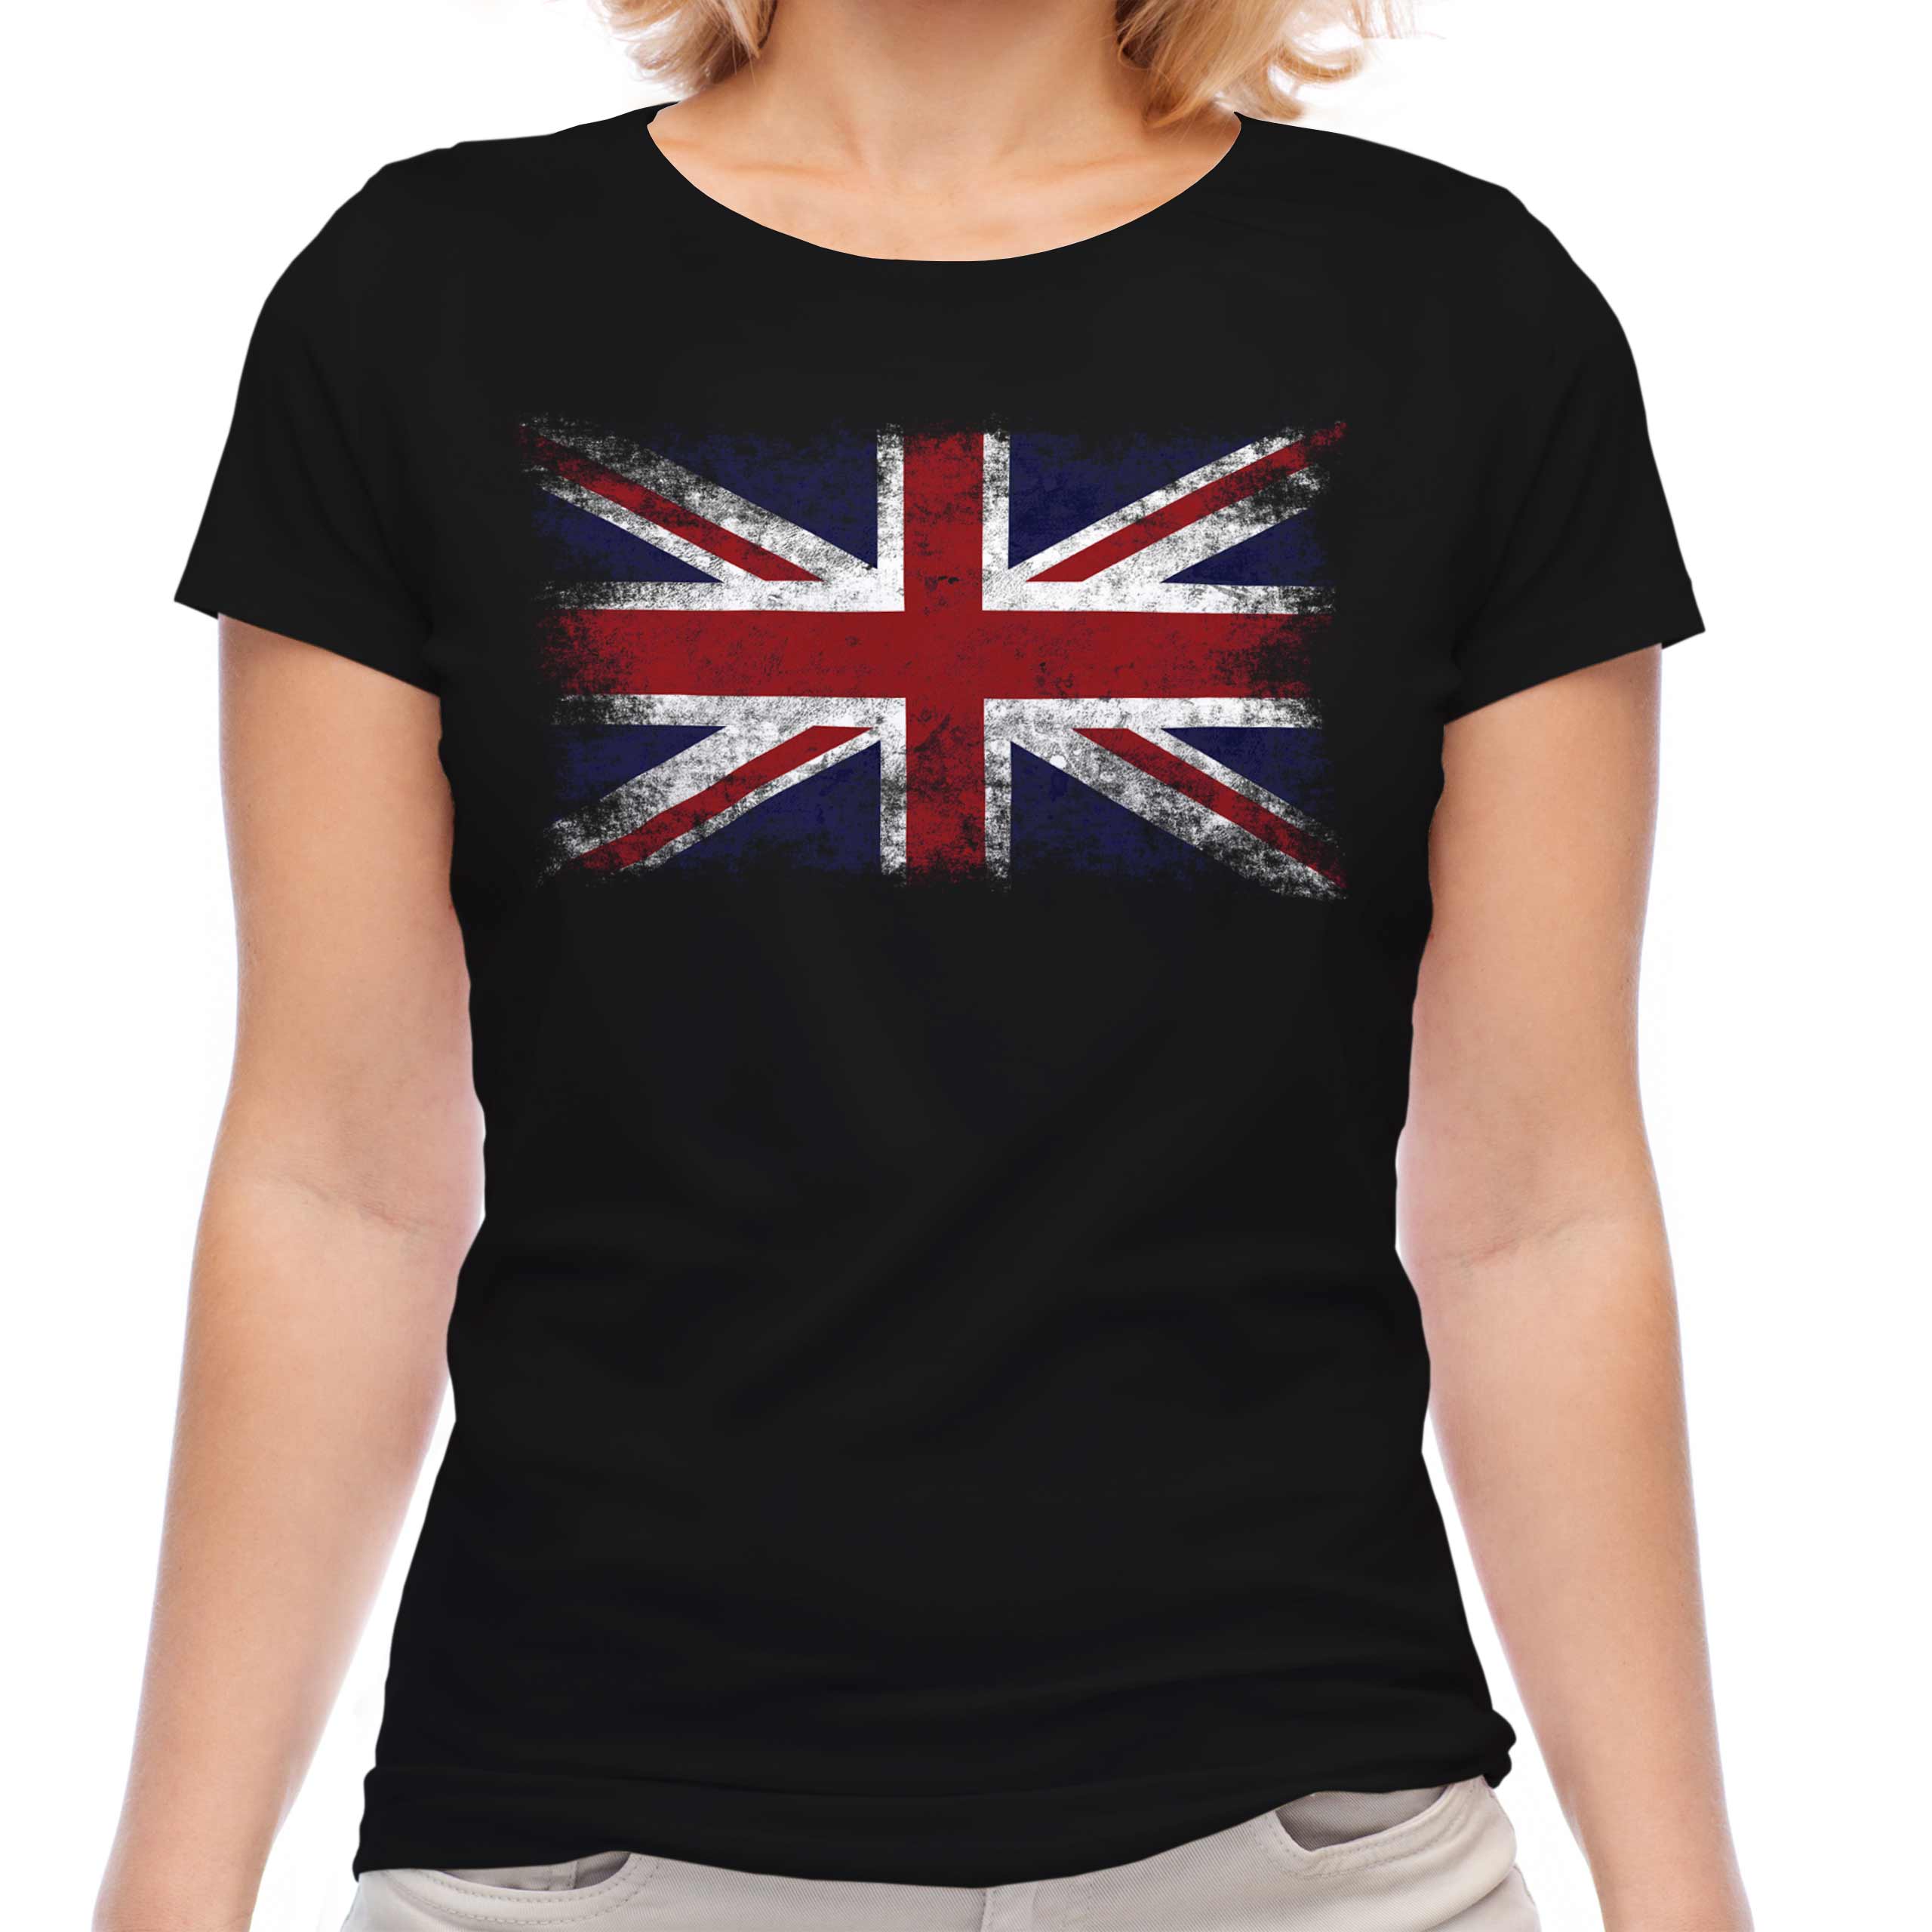 UNION JACK FLAG LADIES T-SHIRT TOP UK GB GREAT BRITAIN UNITED KINGDOM |